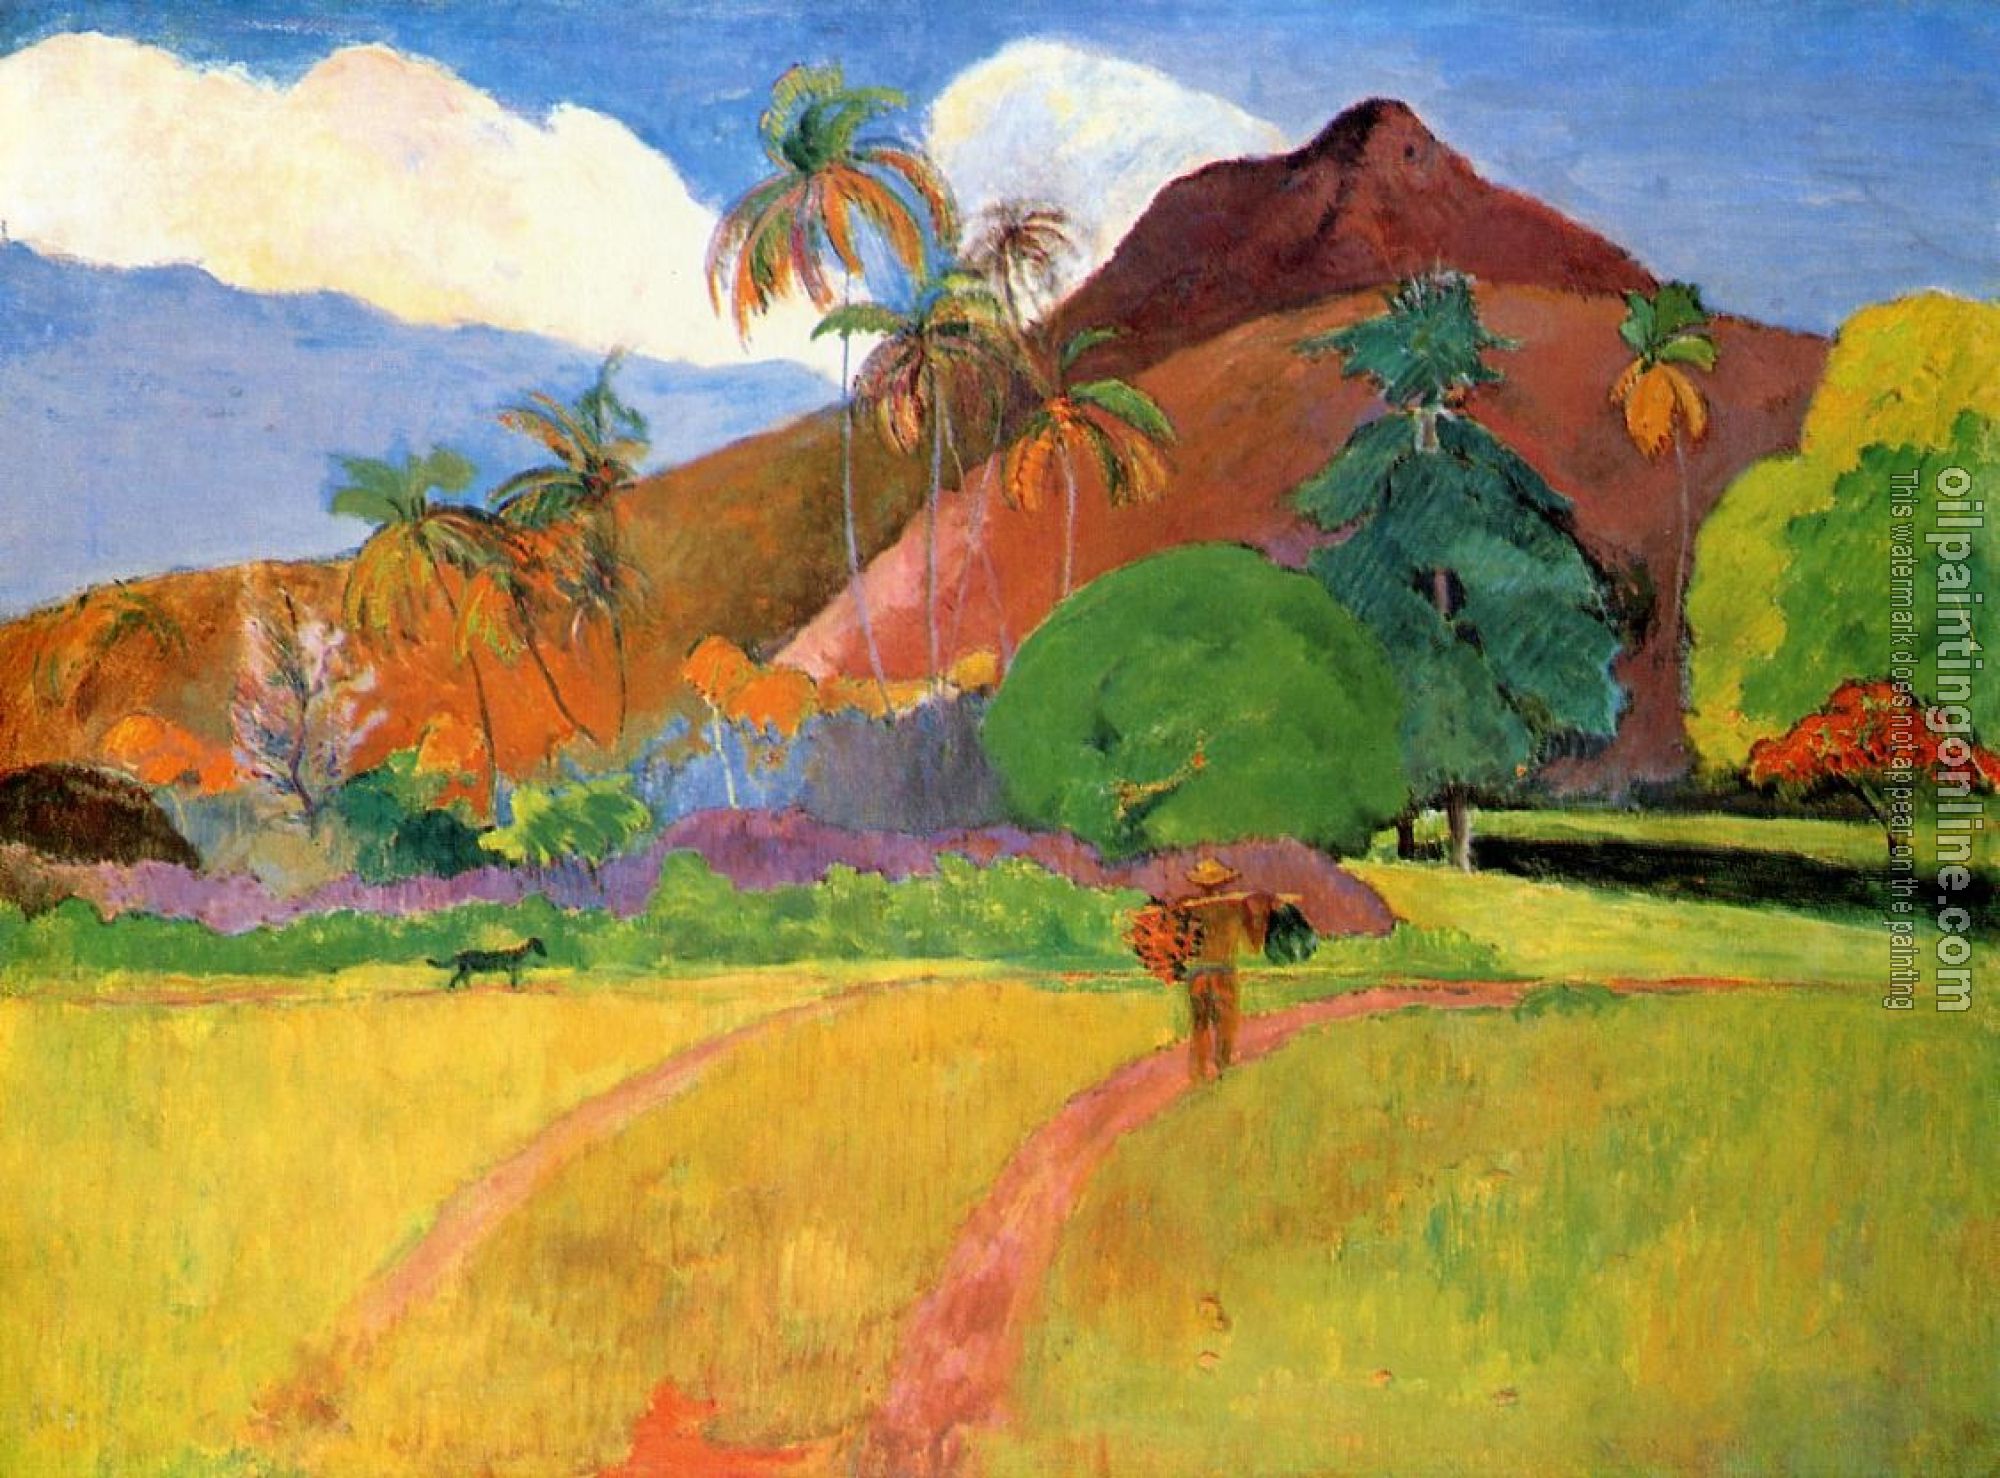 Gauguin, Paul - Tahitian Landscape